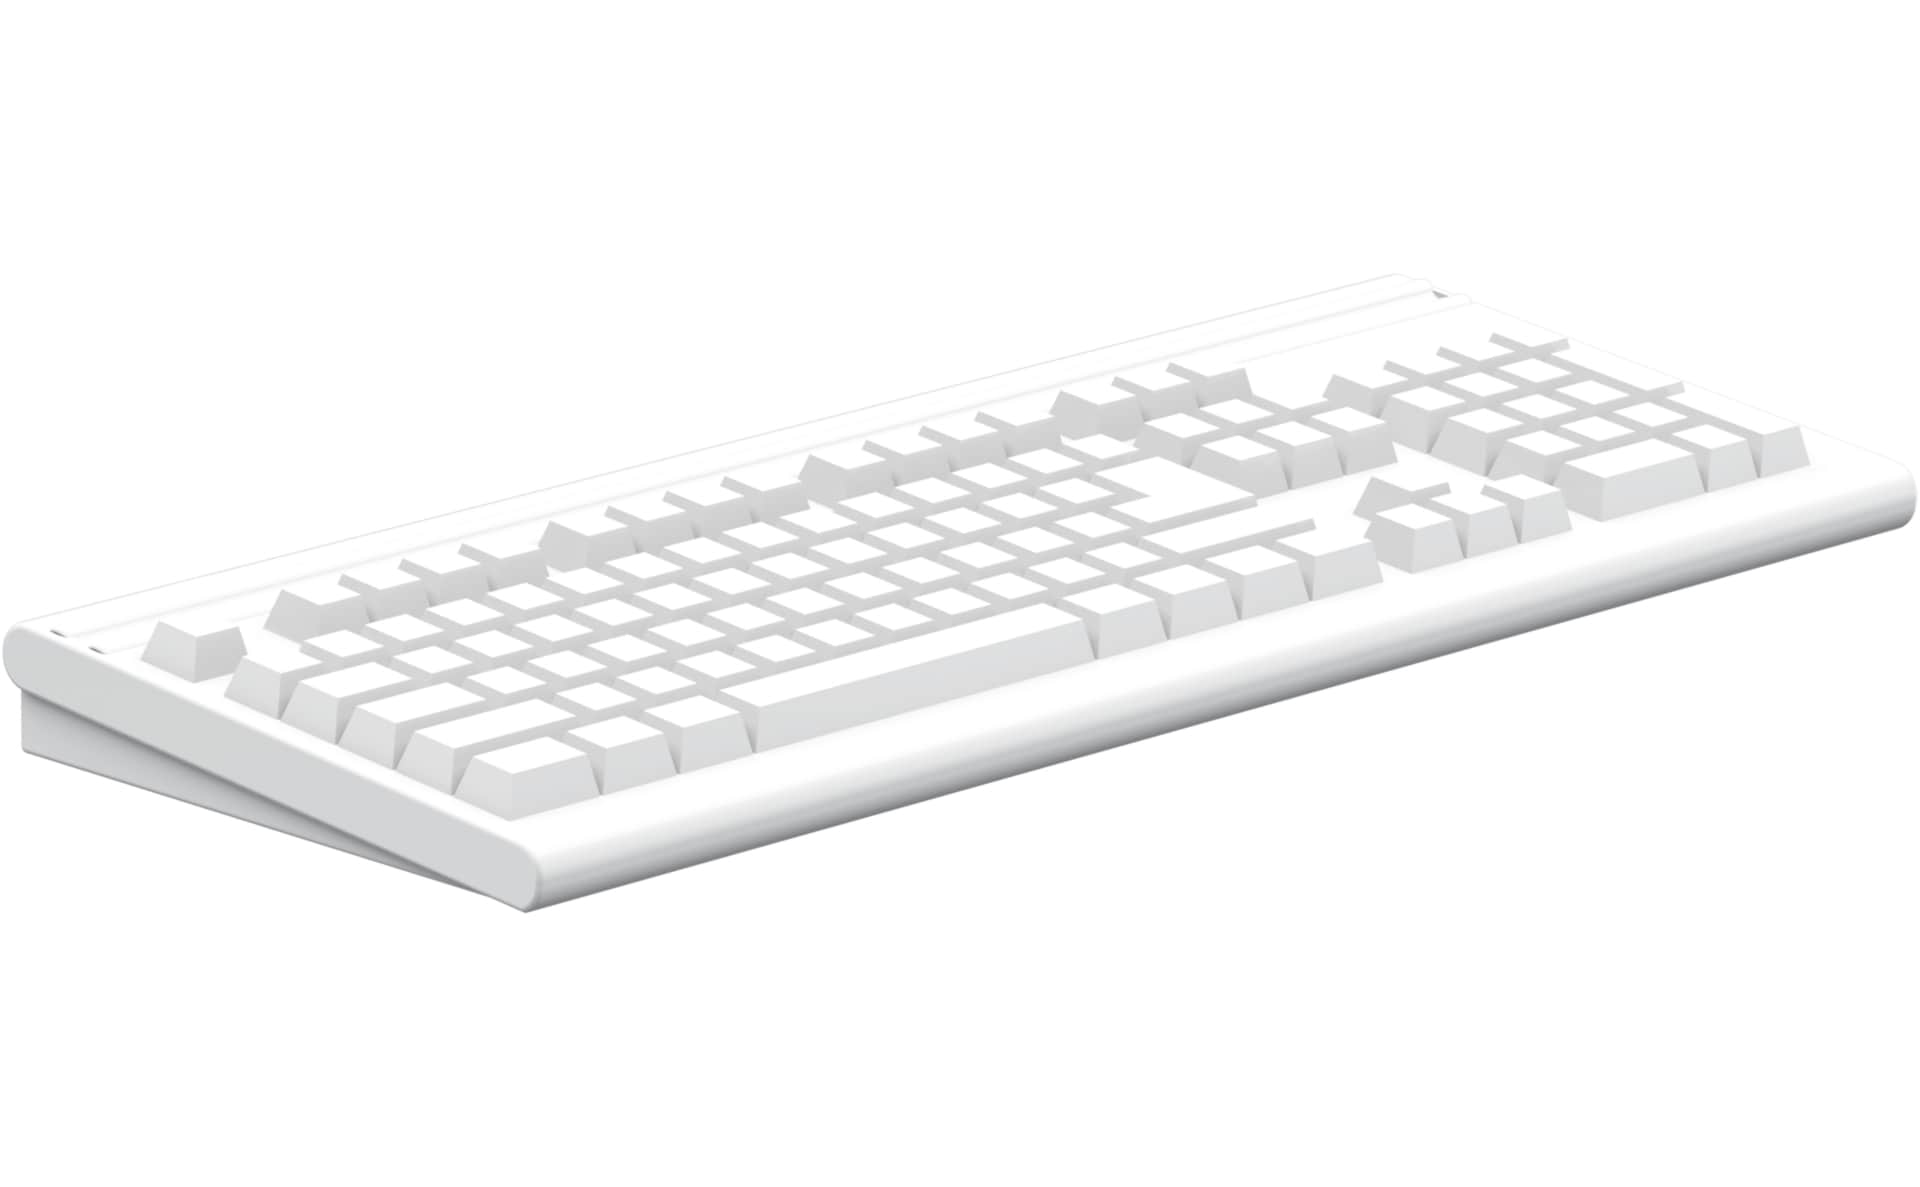 Enovate Medical Seal Shield Keyboard - White